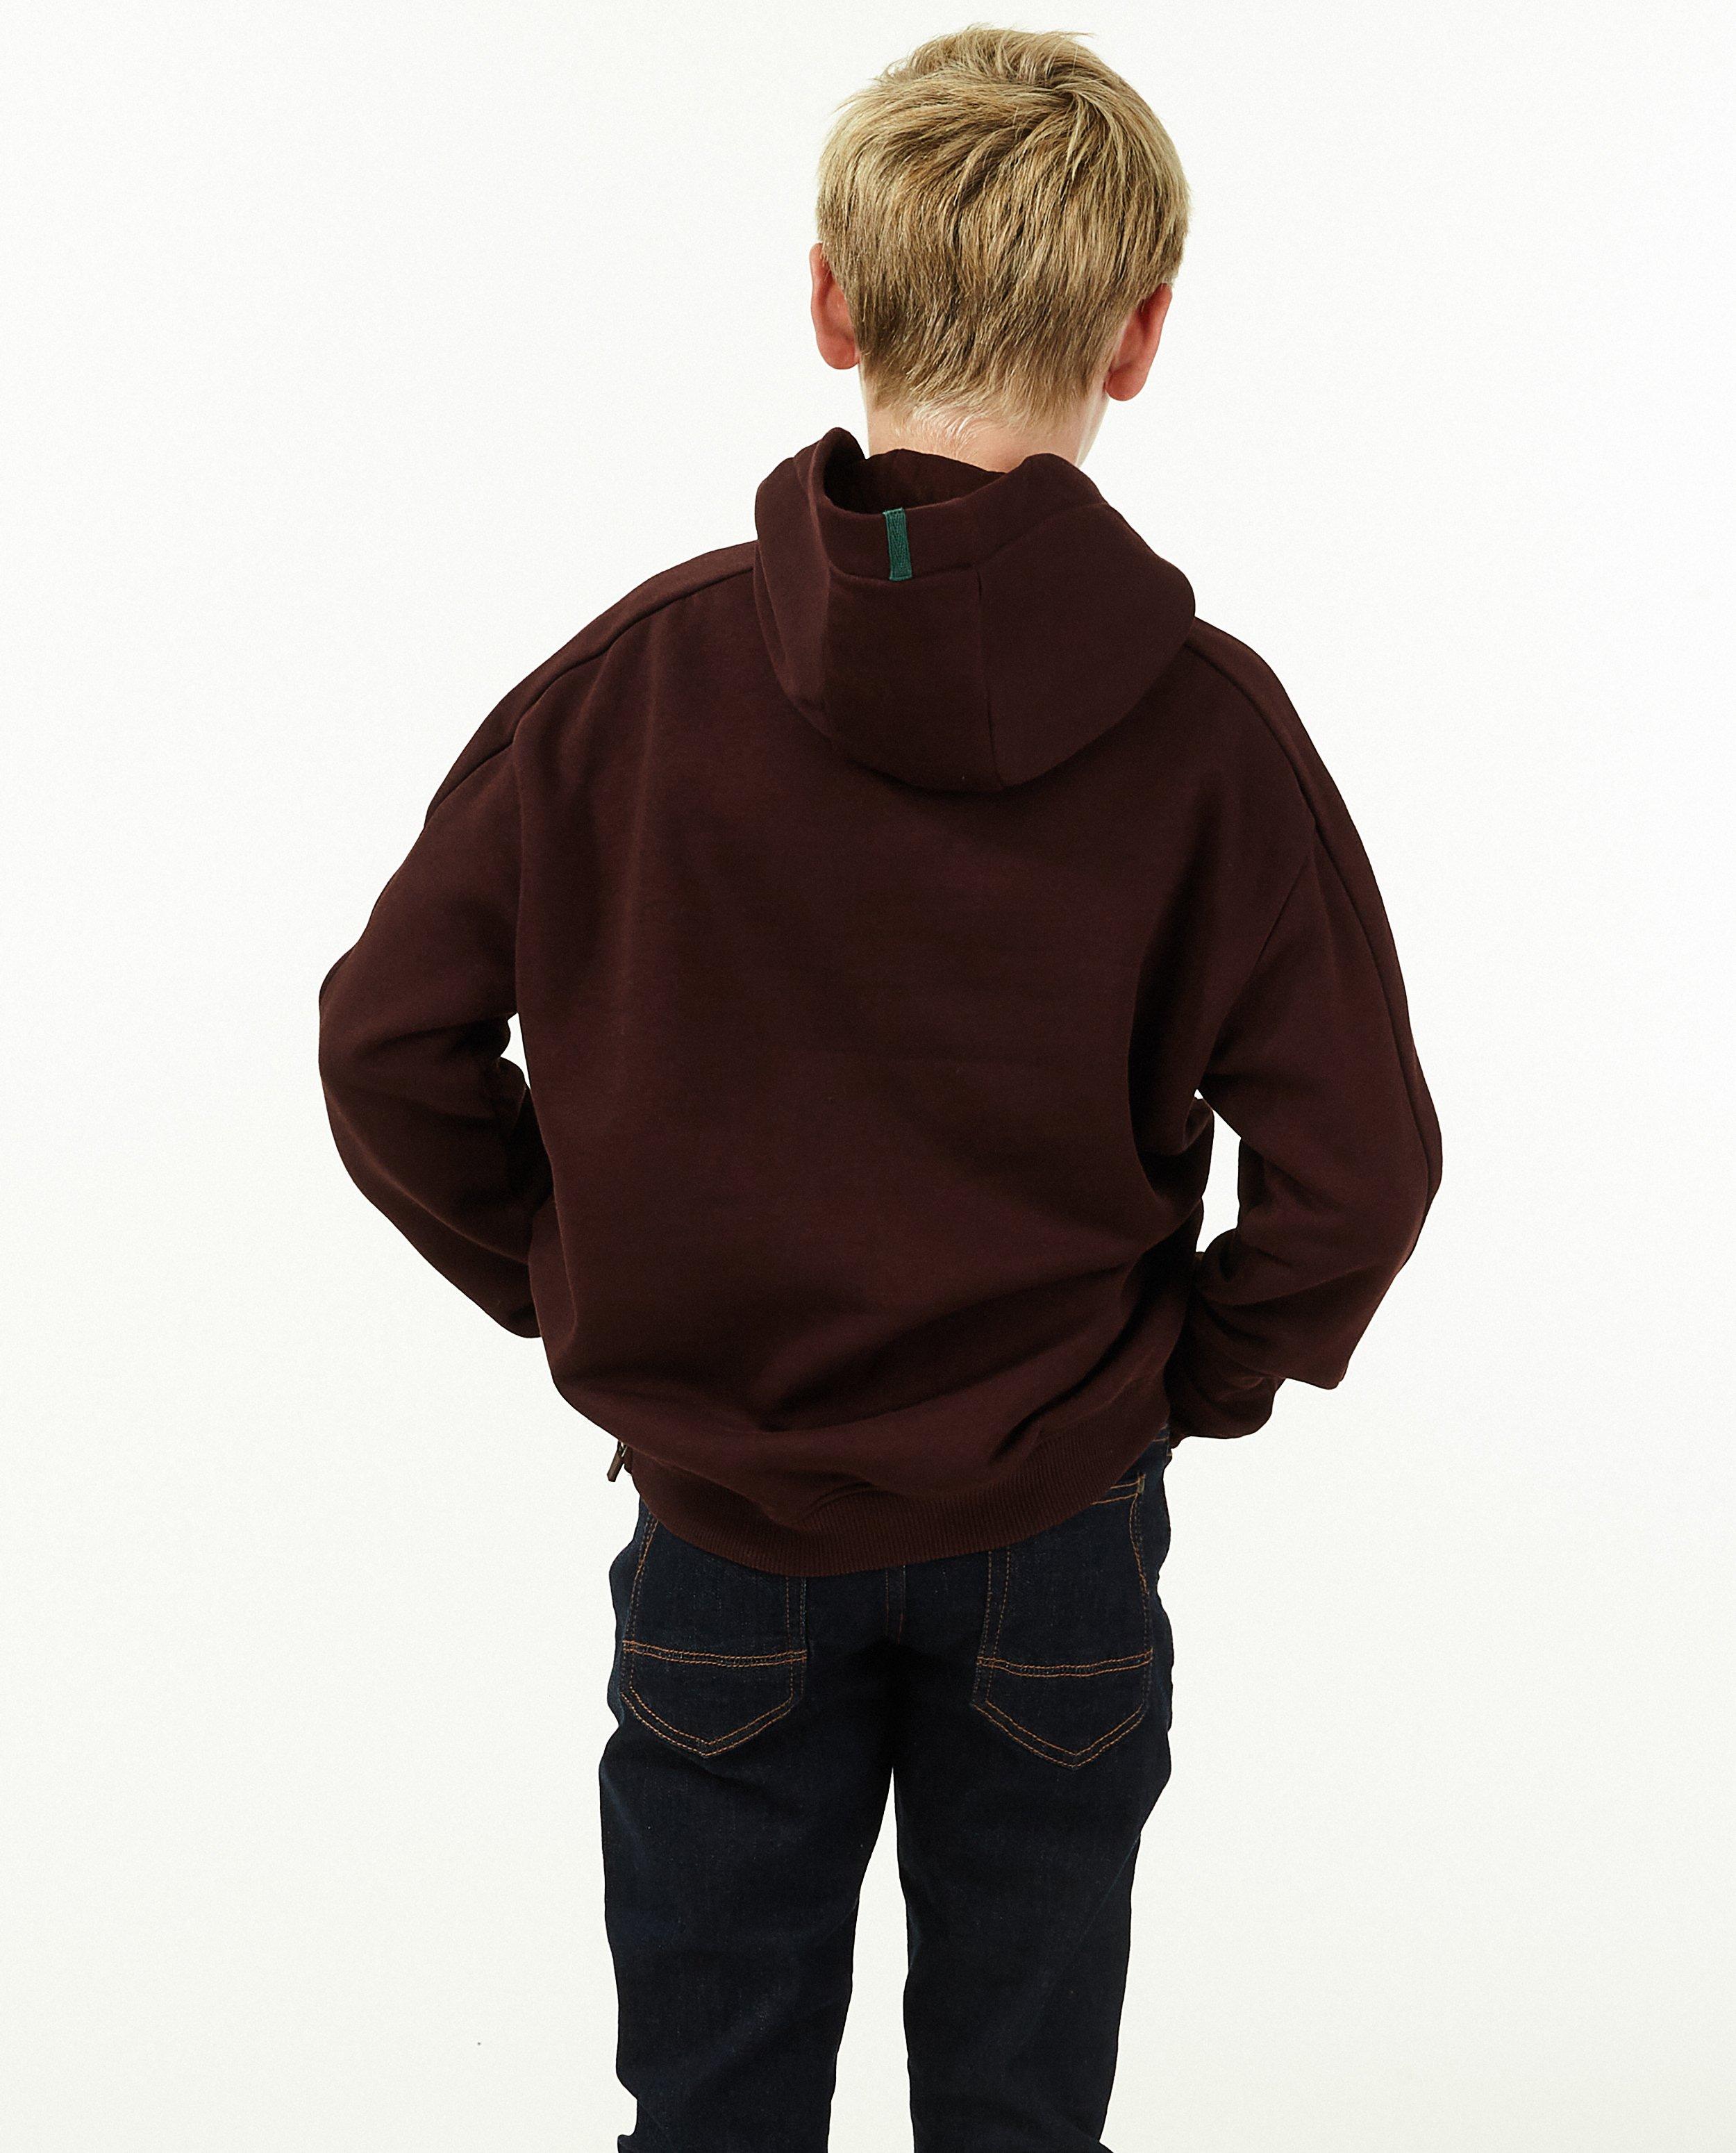 Sweaters - Bordeaux hoodie #LikeMe